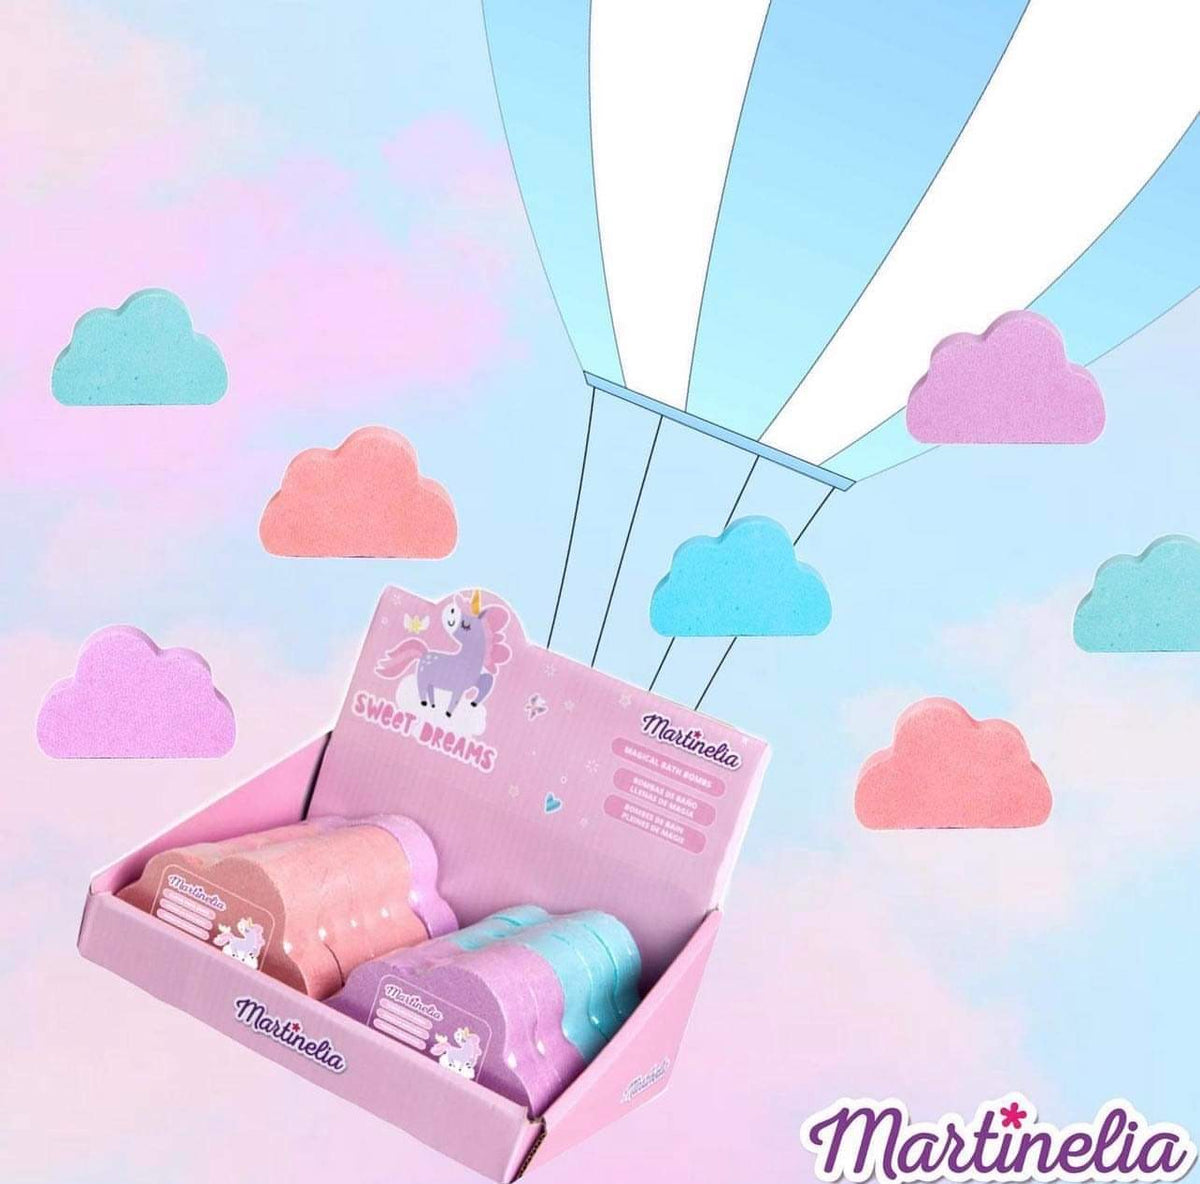 Sweet Dreams Cloud Bath Bomb